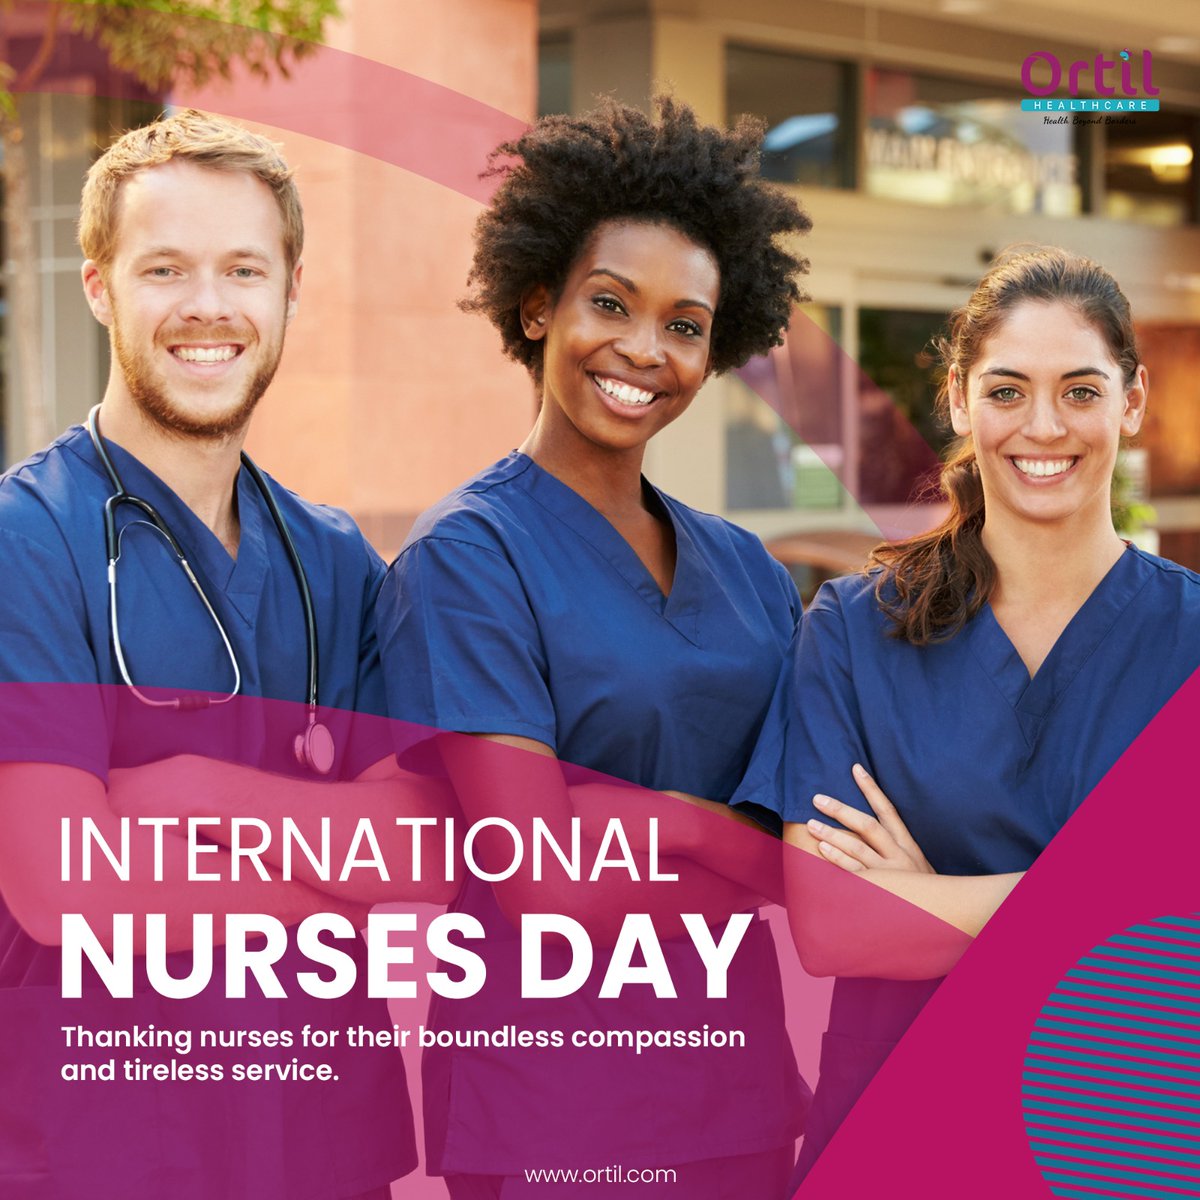 A heartfelt thanks to all the amazing nurses out there.
HAPPY INTERNATIONAL NURSES DAY!!
#InternationalNursesDay #NursesDay #NursingHeroes #NurseAppreciation #ThankANurse #Nurselife #NurseCare #NurseCompassion #NurseDedication #NurseInspiration #NurseLeadership #NursingCommunity